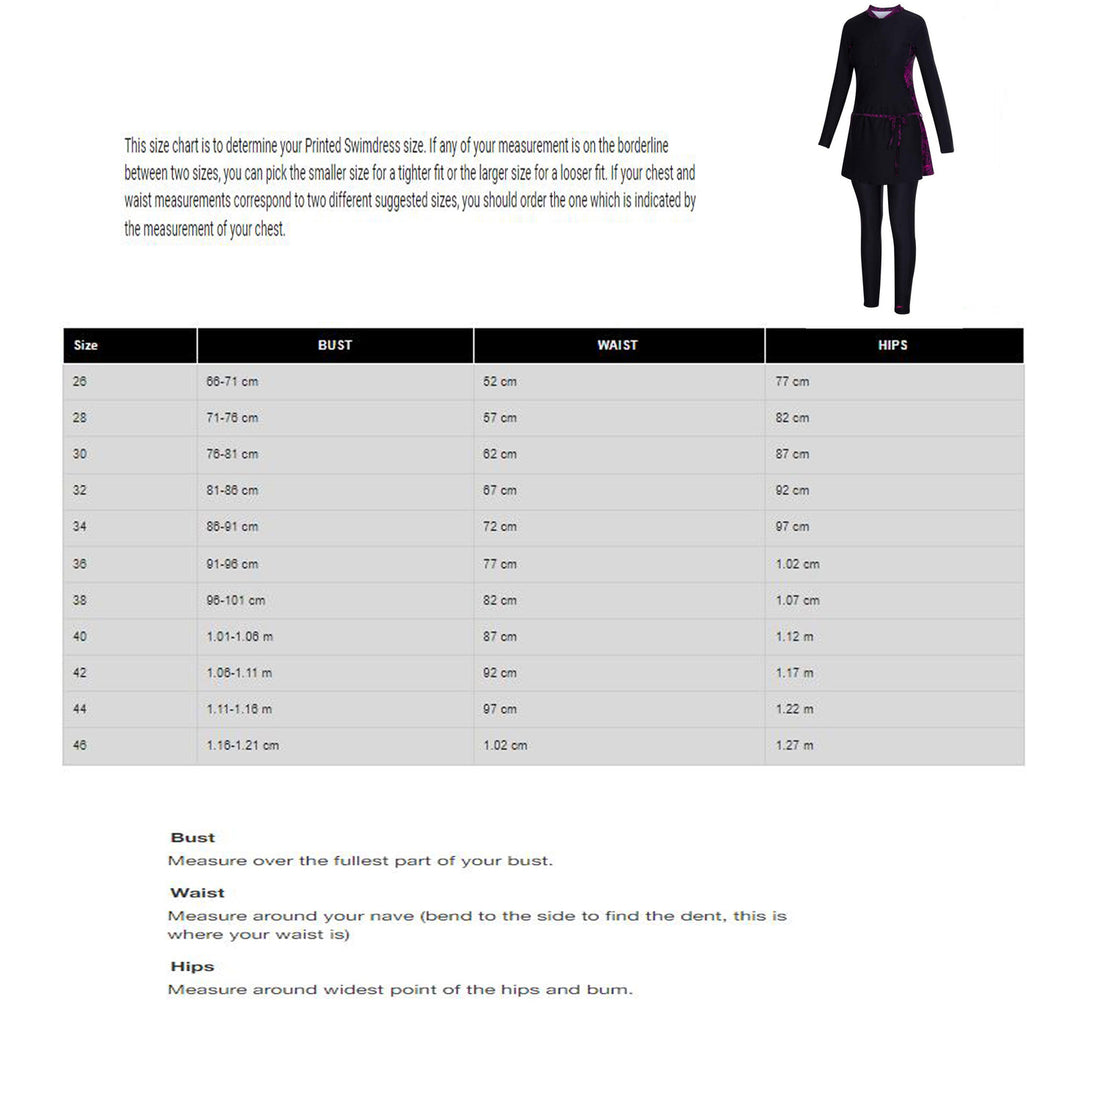 Speedo Female 2 Piece Full Two Piece Body Suit- Navy - Best Price online Prokicksports.com